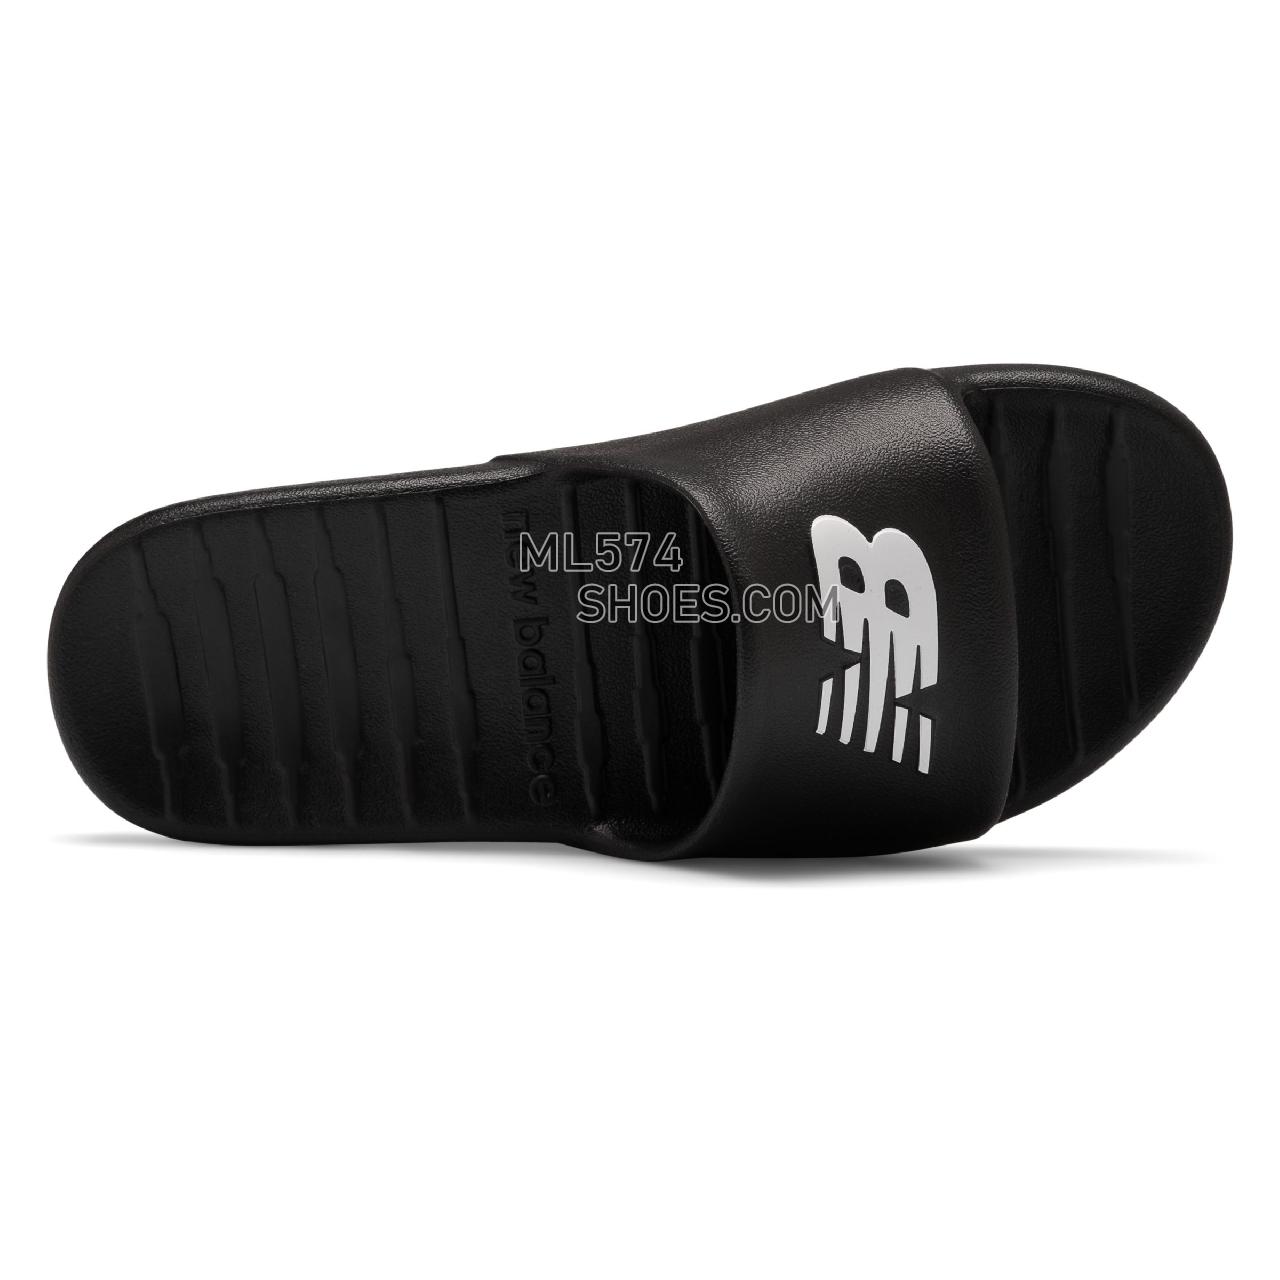 New Balance 100 - Men's Flip Flops - Black with White - SUF100BK